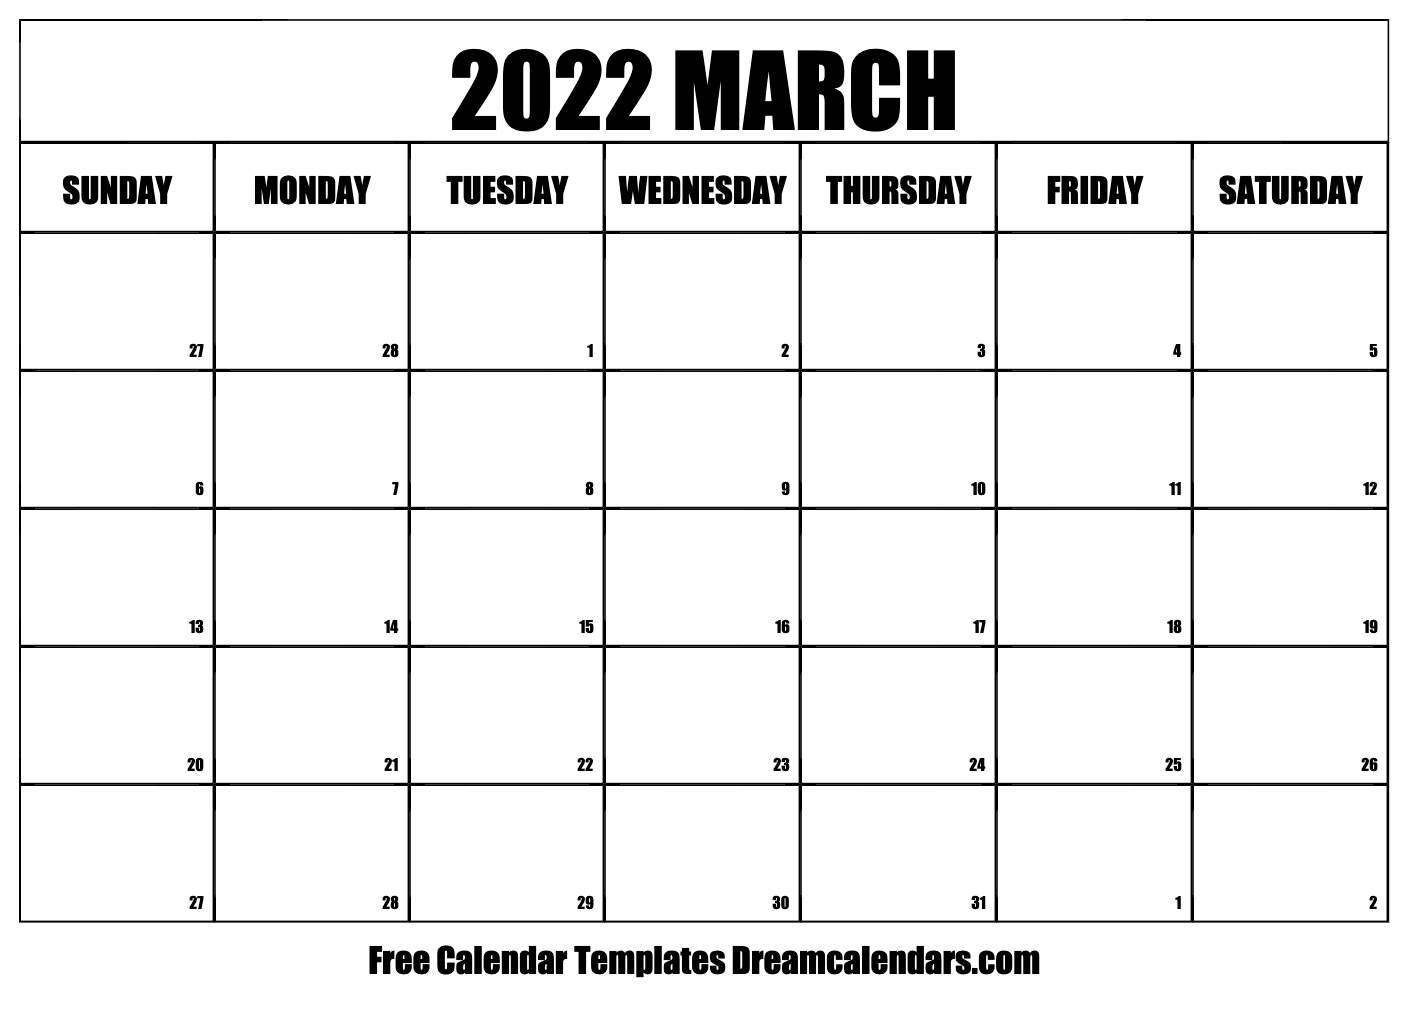 March 2022 Calendar | Free Blank Printable Templates